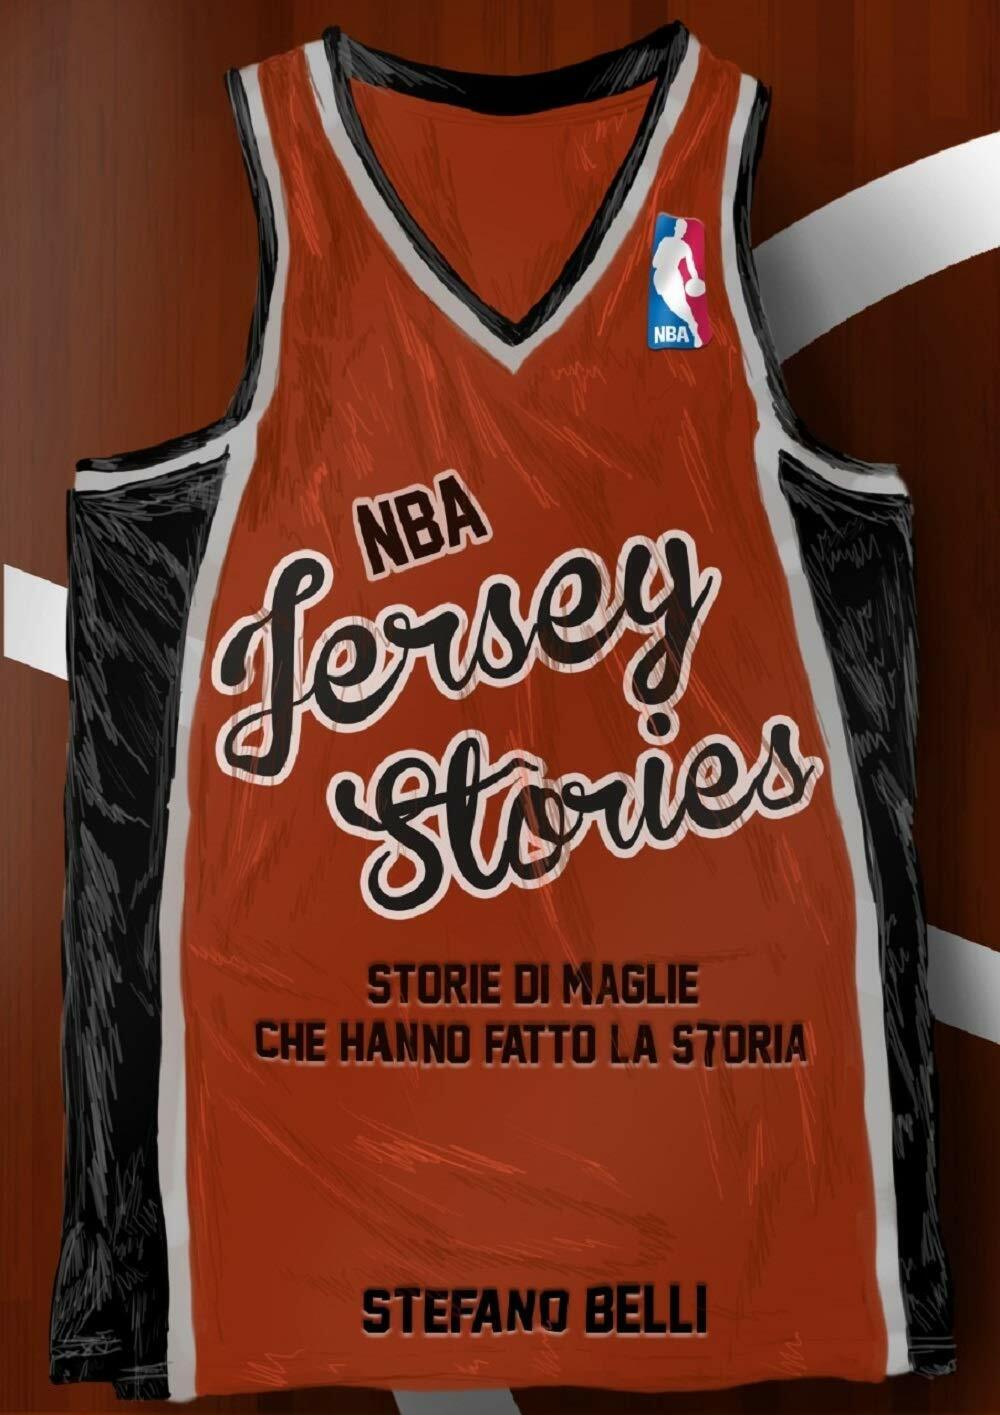 NBA Jersey Stories -  Stefano Belli - Coaching Sport, 2020